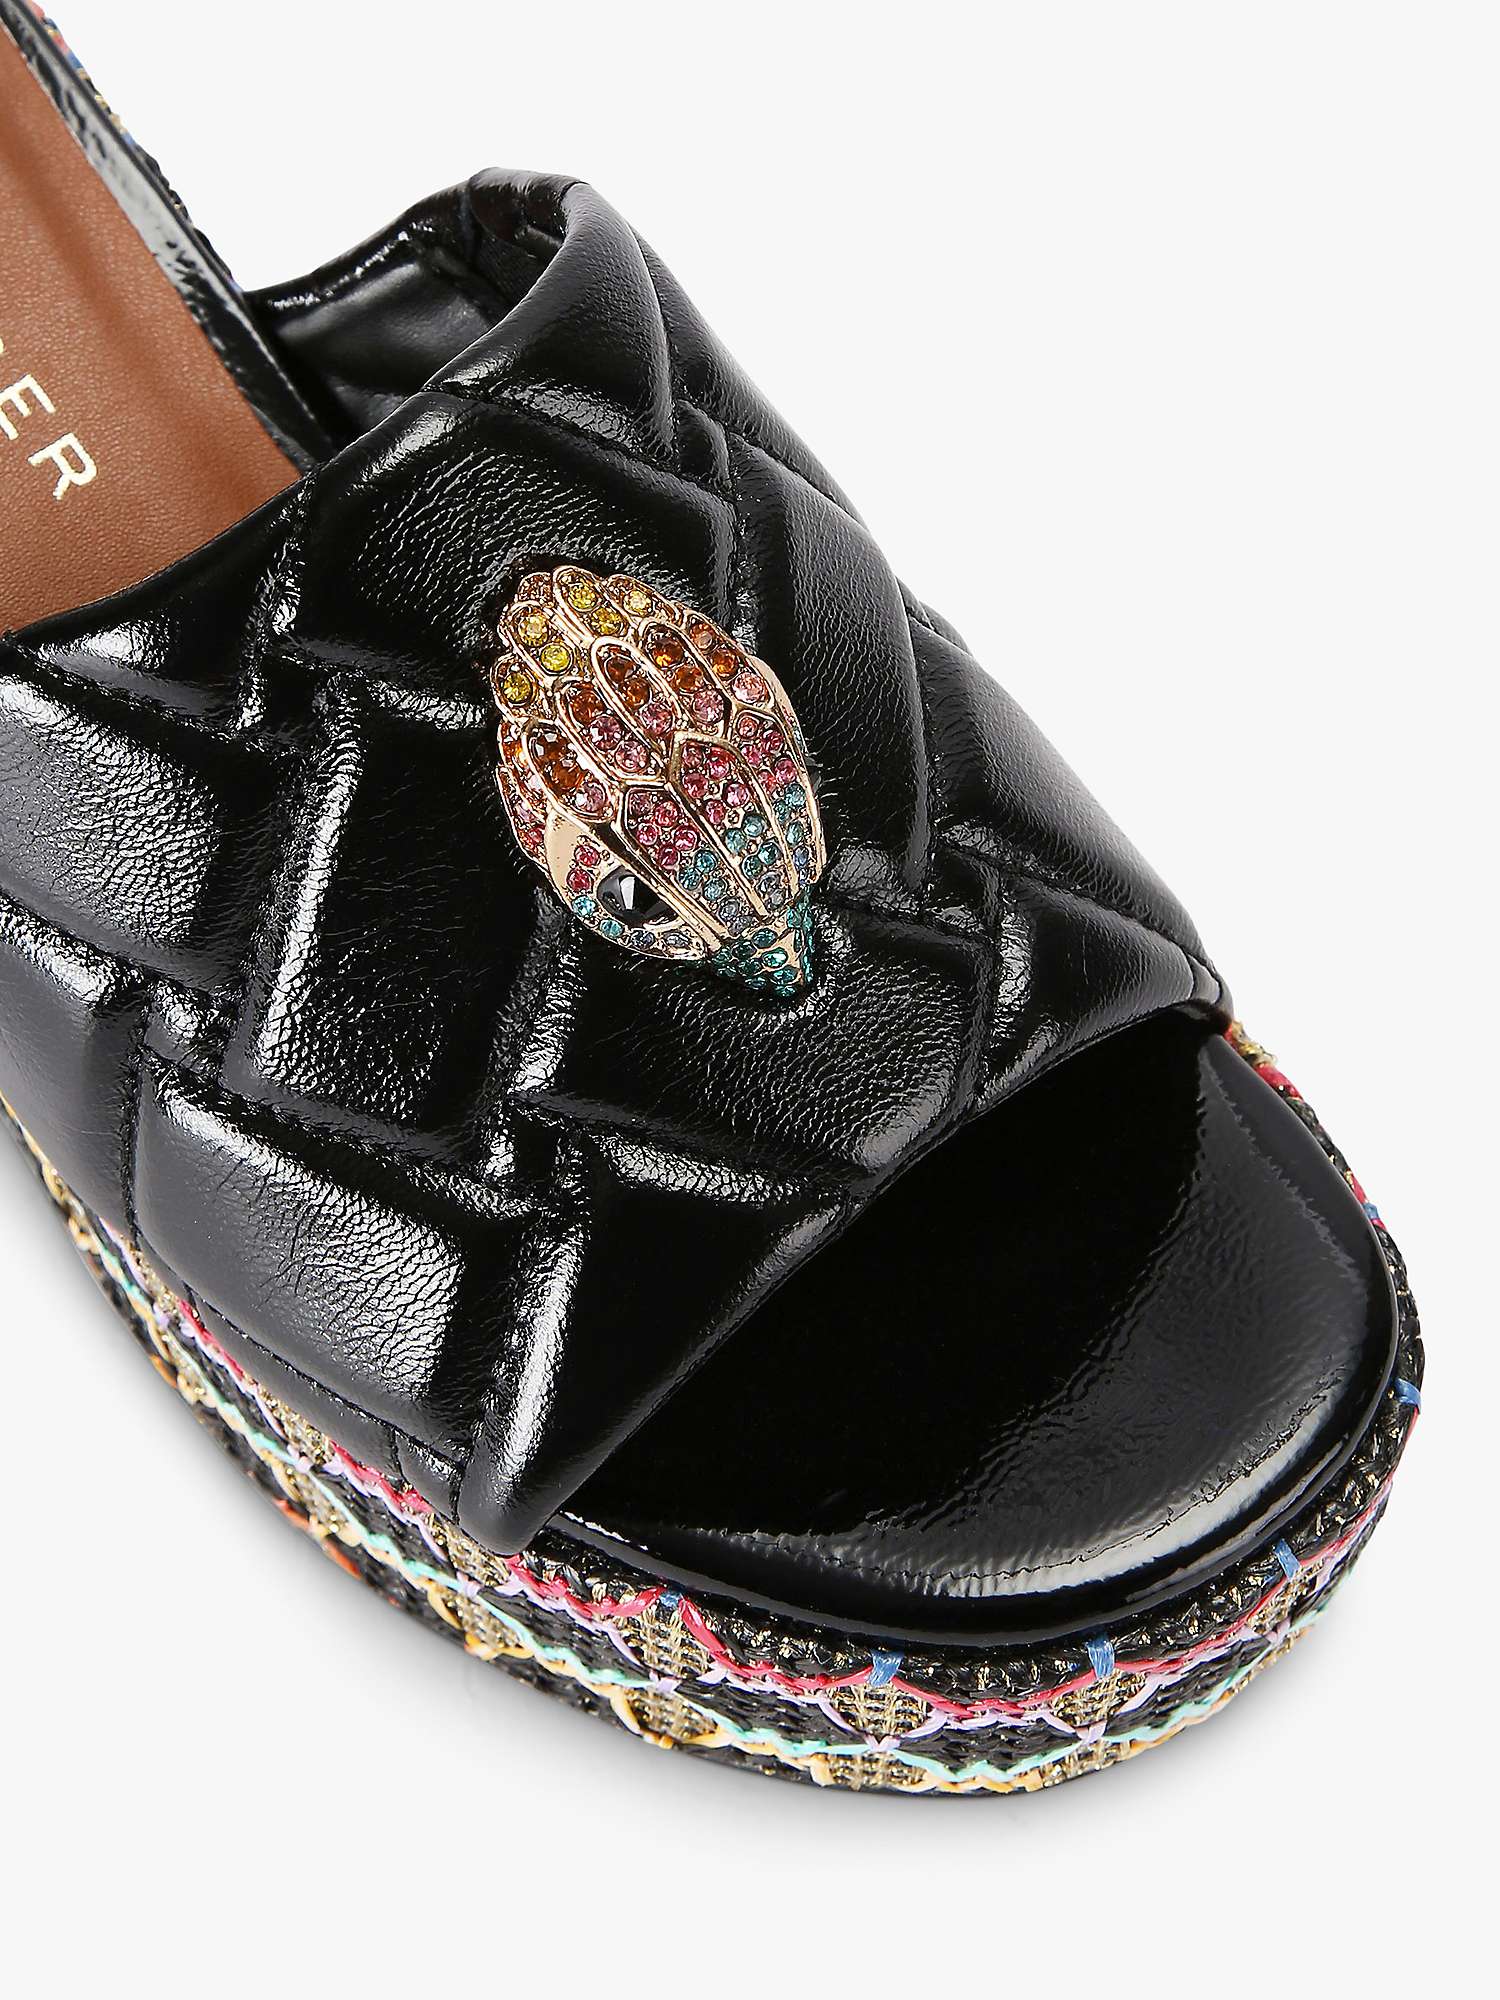 Buy Kurt Geiger London Kensington Patent Leather Wedge Heel Mule Sandals, Black/Multi Online at johnlewis.com